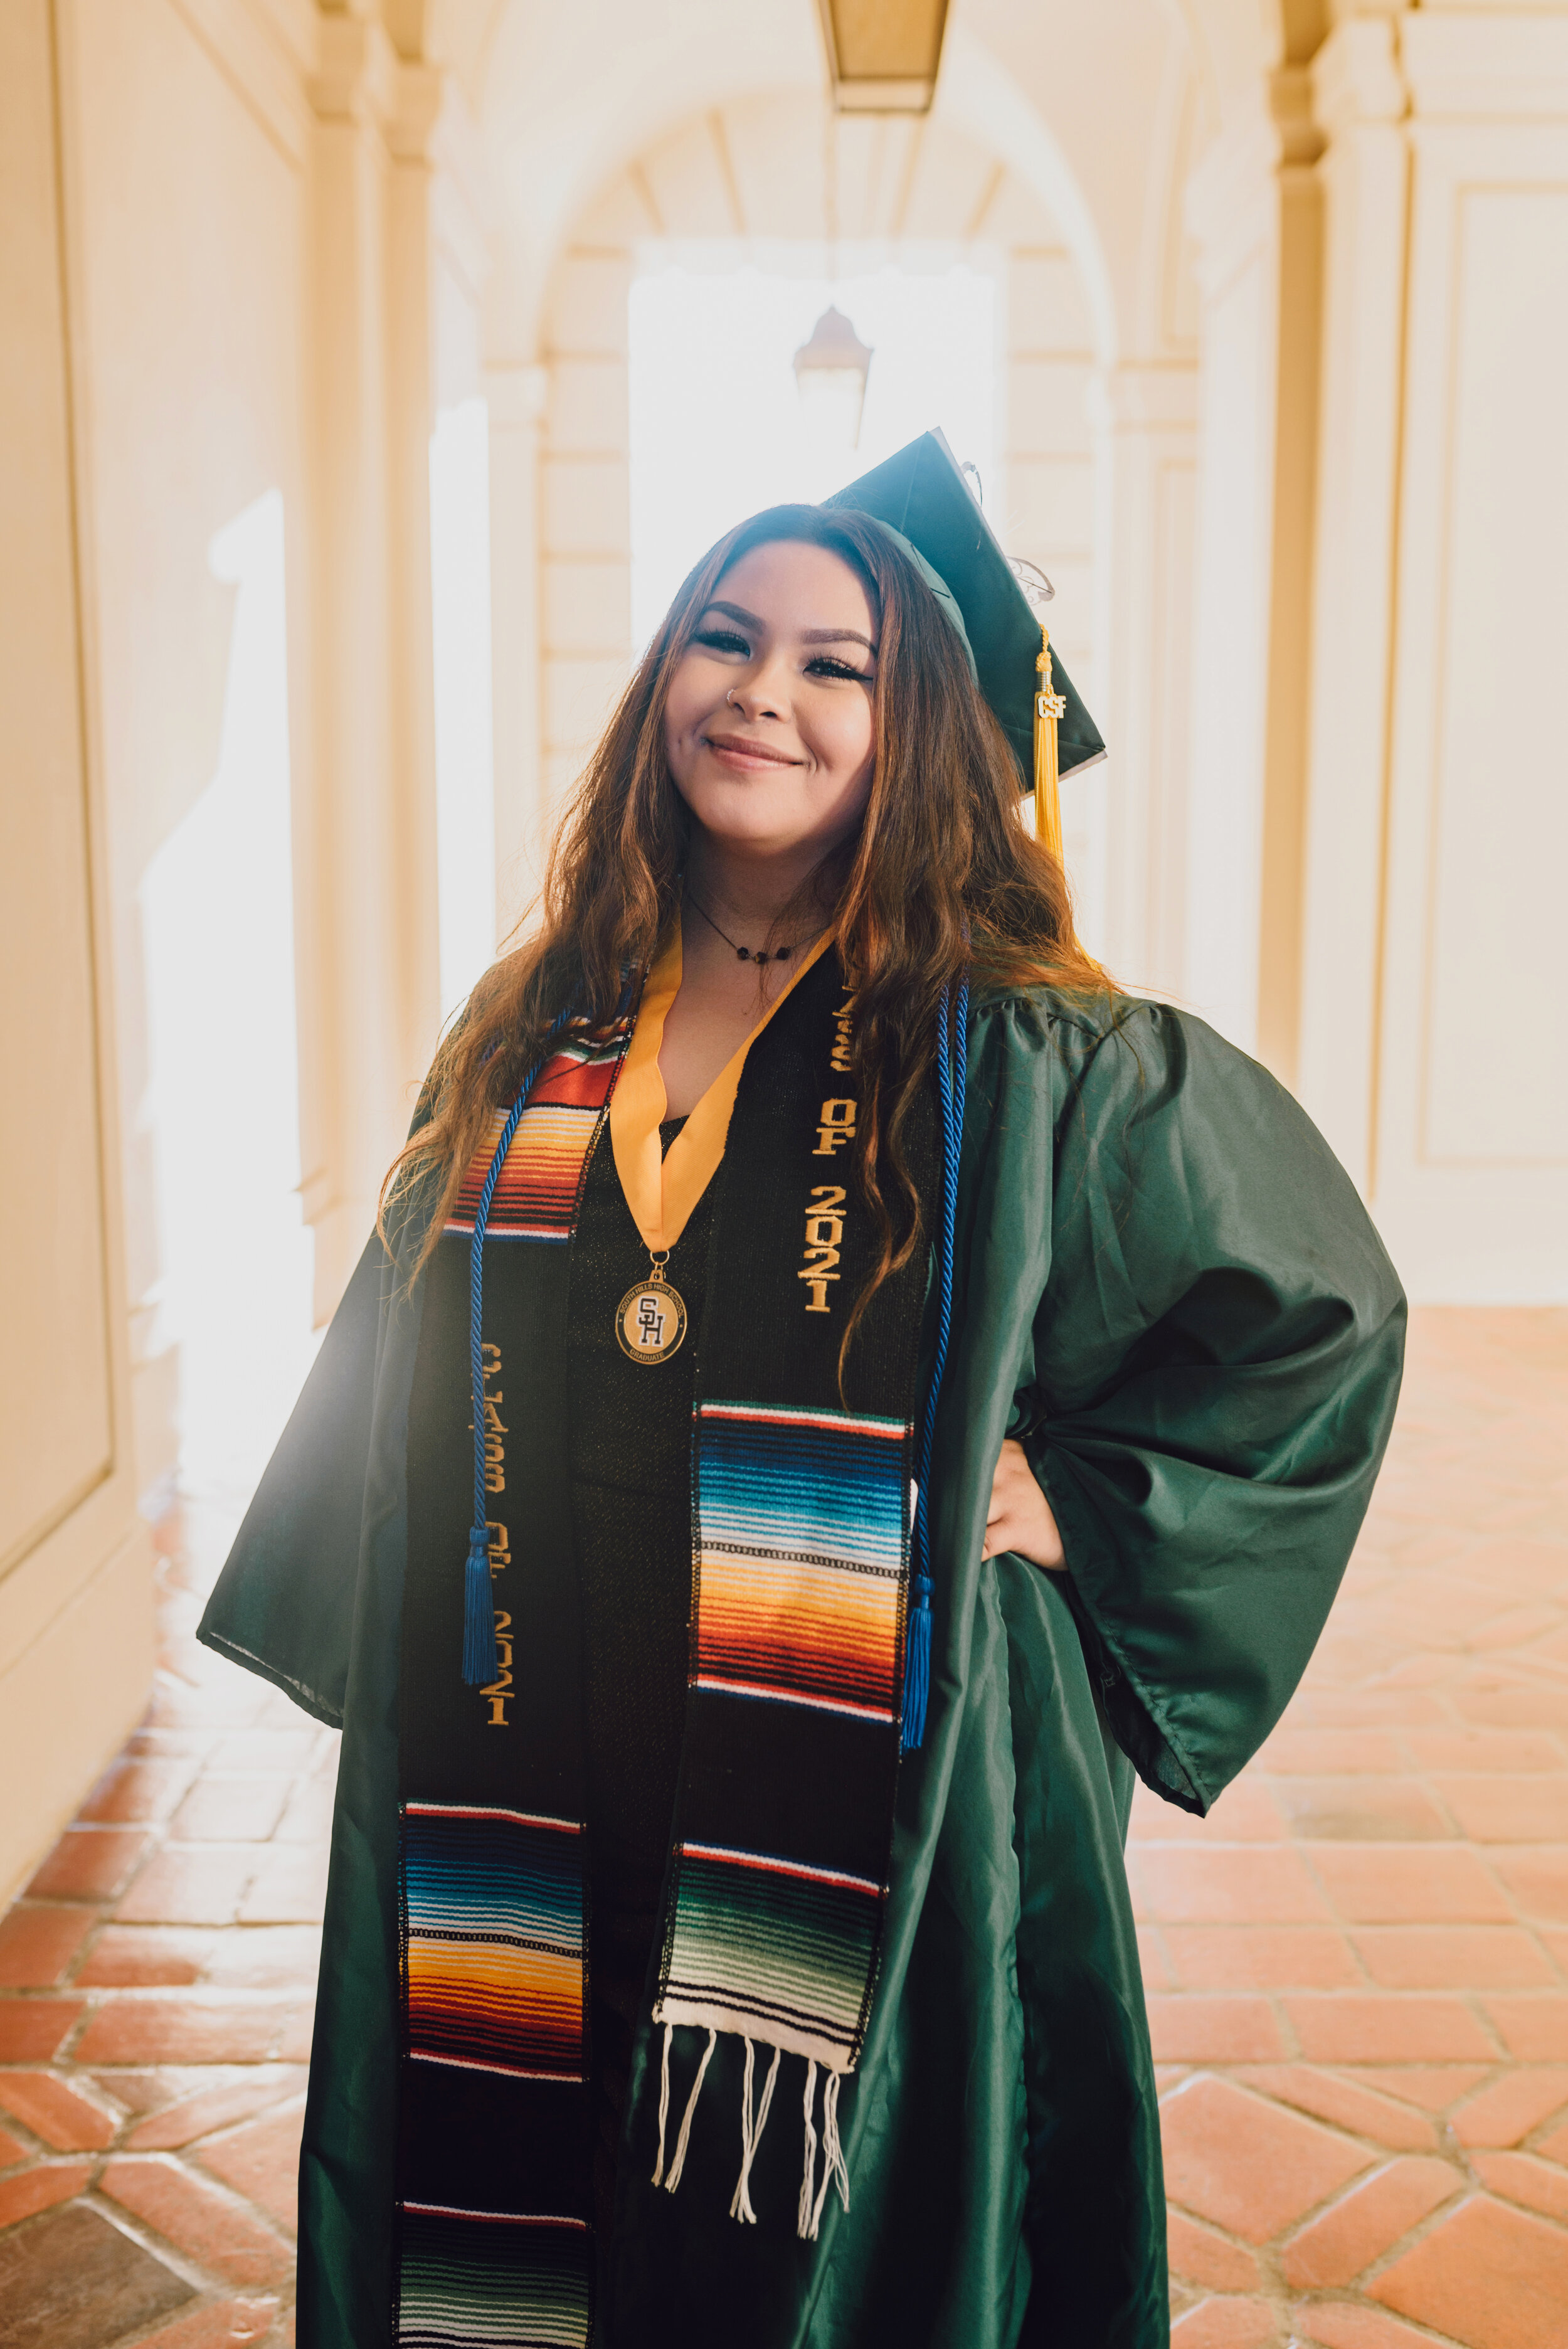 LosAngeles-Graduation-Portrait-Photographer-High-School-10.jpg